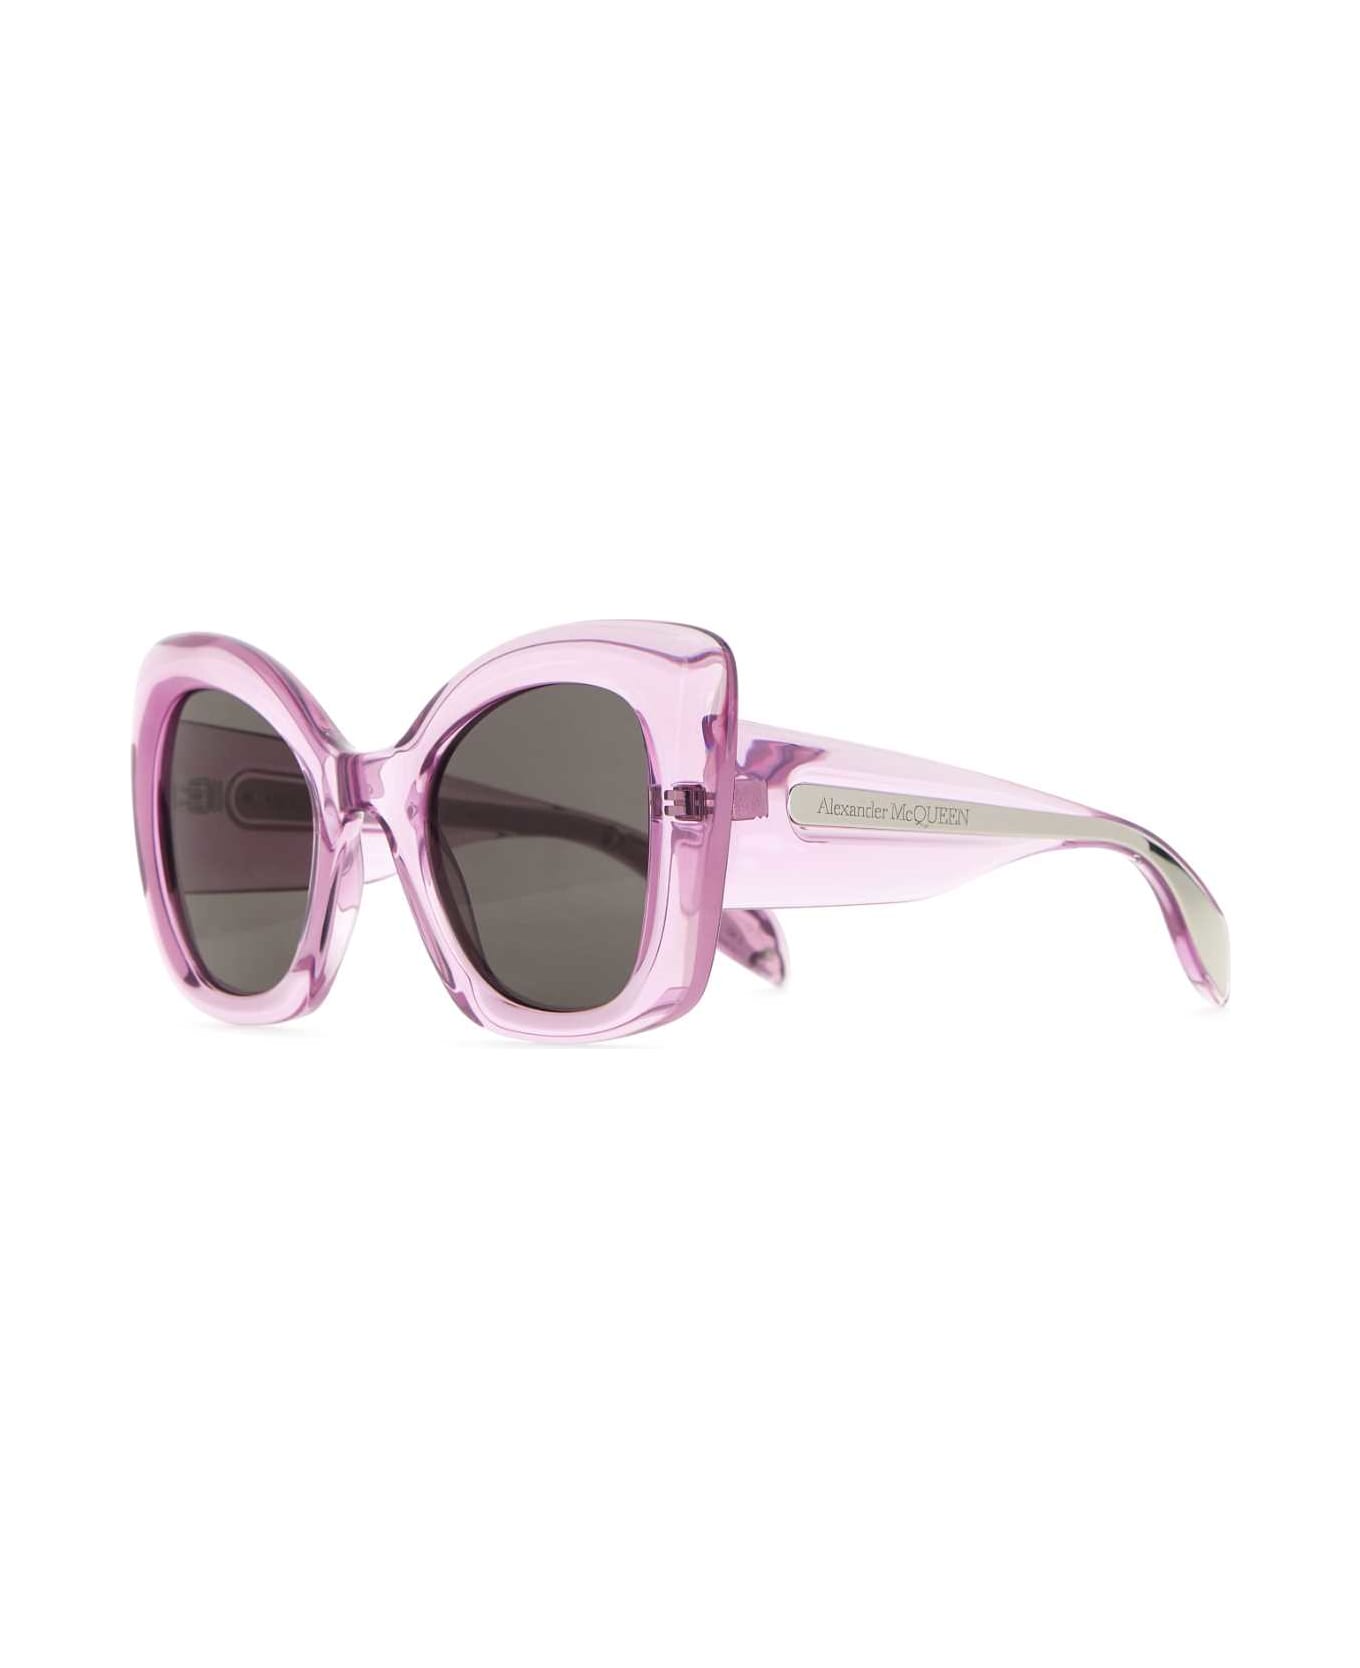 Alexander McQueen Pink Acetate The Curve Sunglasses - 5128